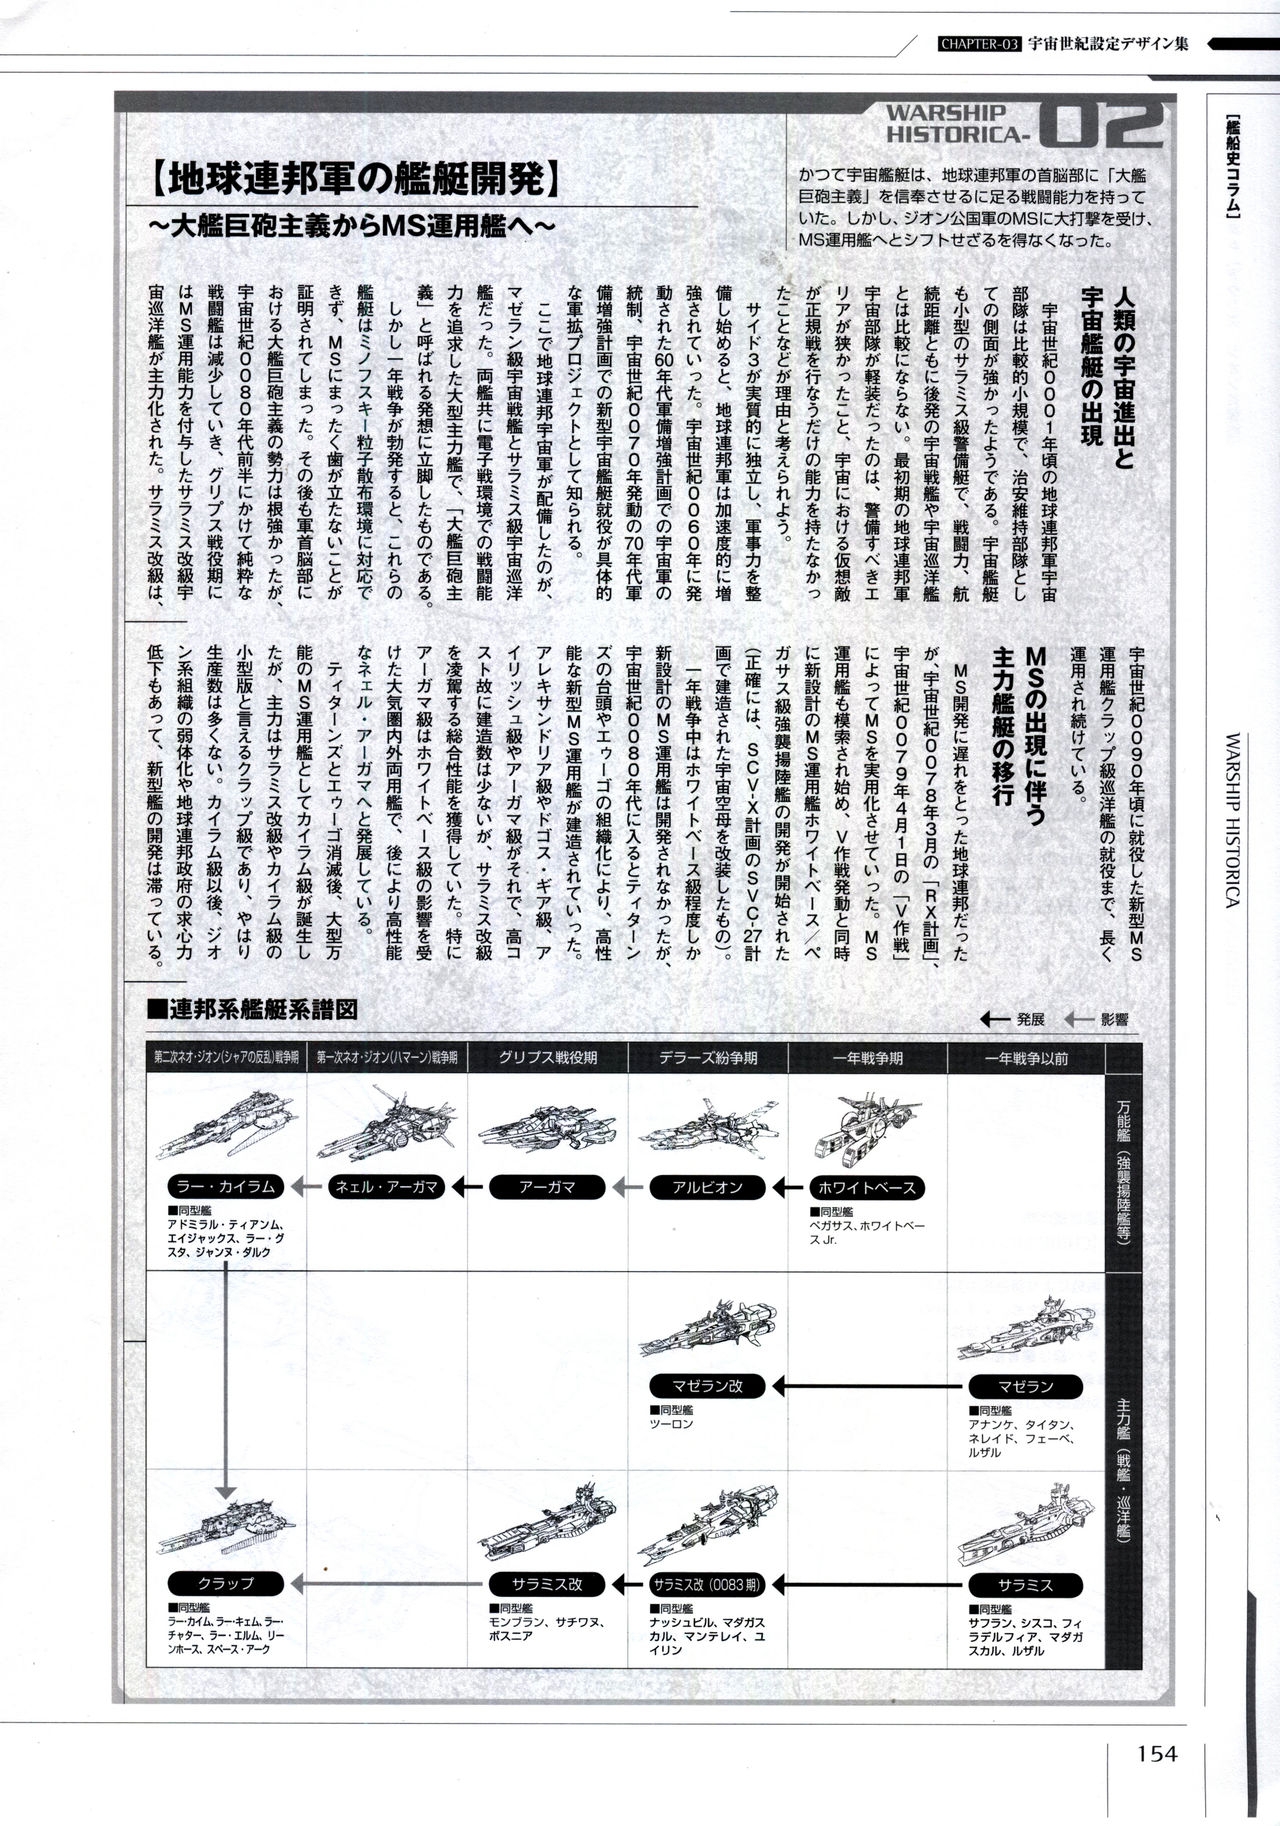 Mobile Suit Gundam - Ship & Aerospace Plane Encyclopedia - Revised Edition 159